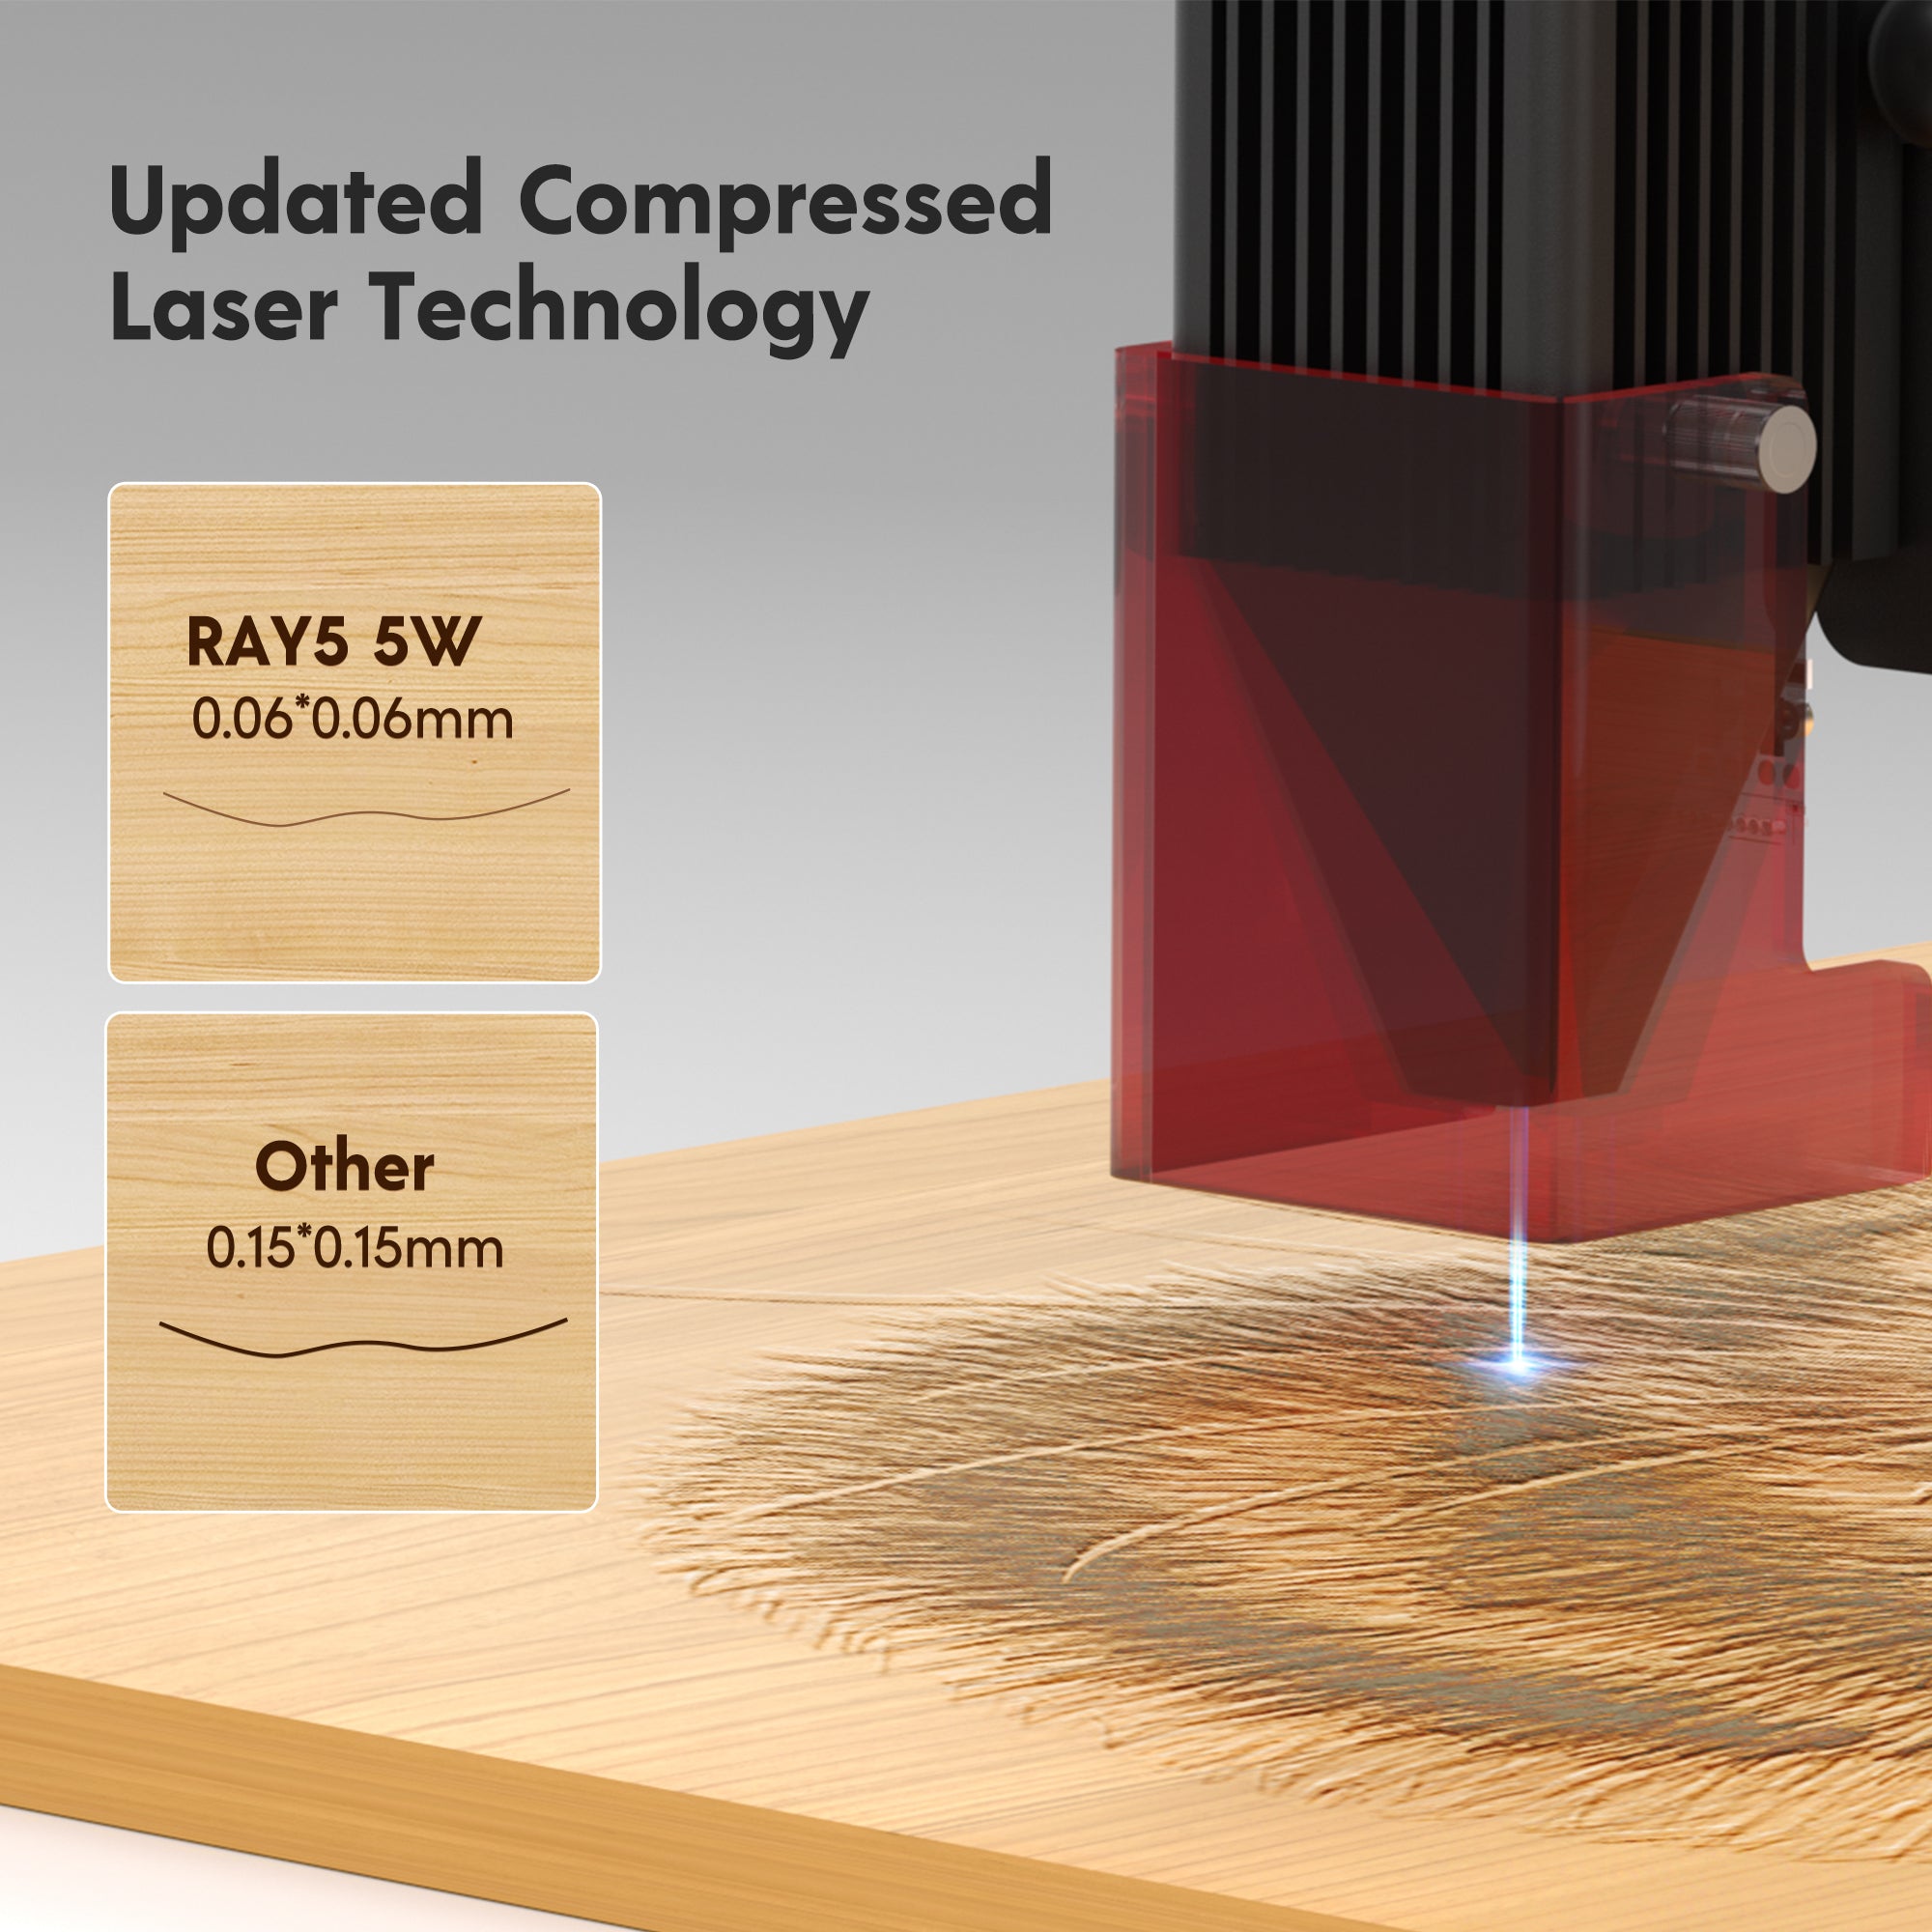 Incisore laser Ray5 5W